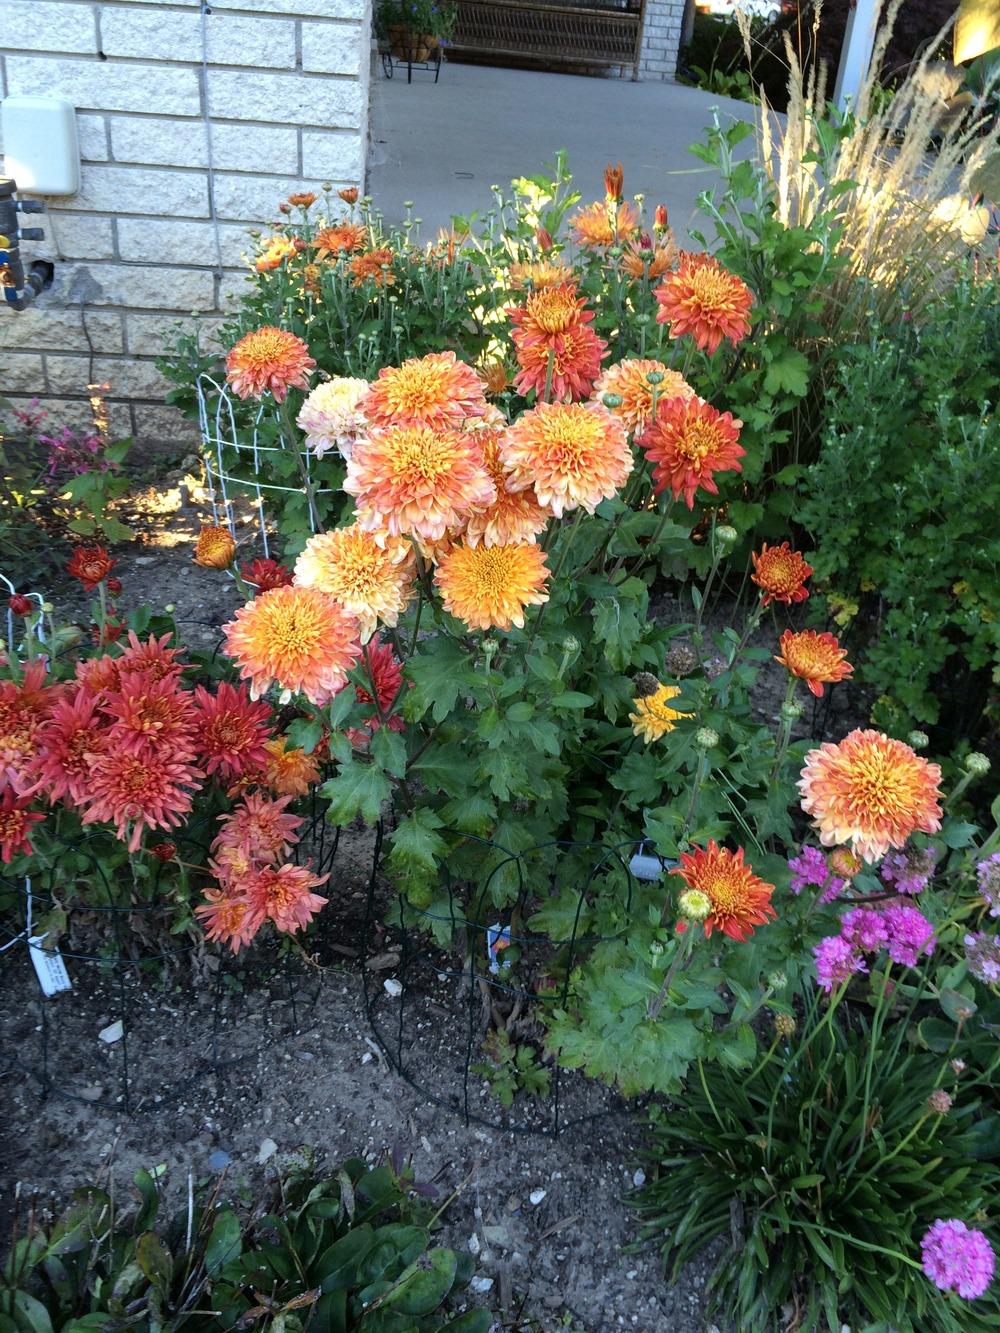 Photo of Chrysanthemum uploaded by jvdubb